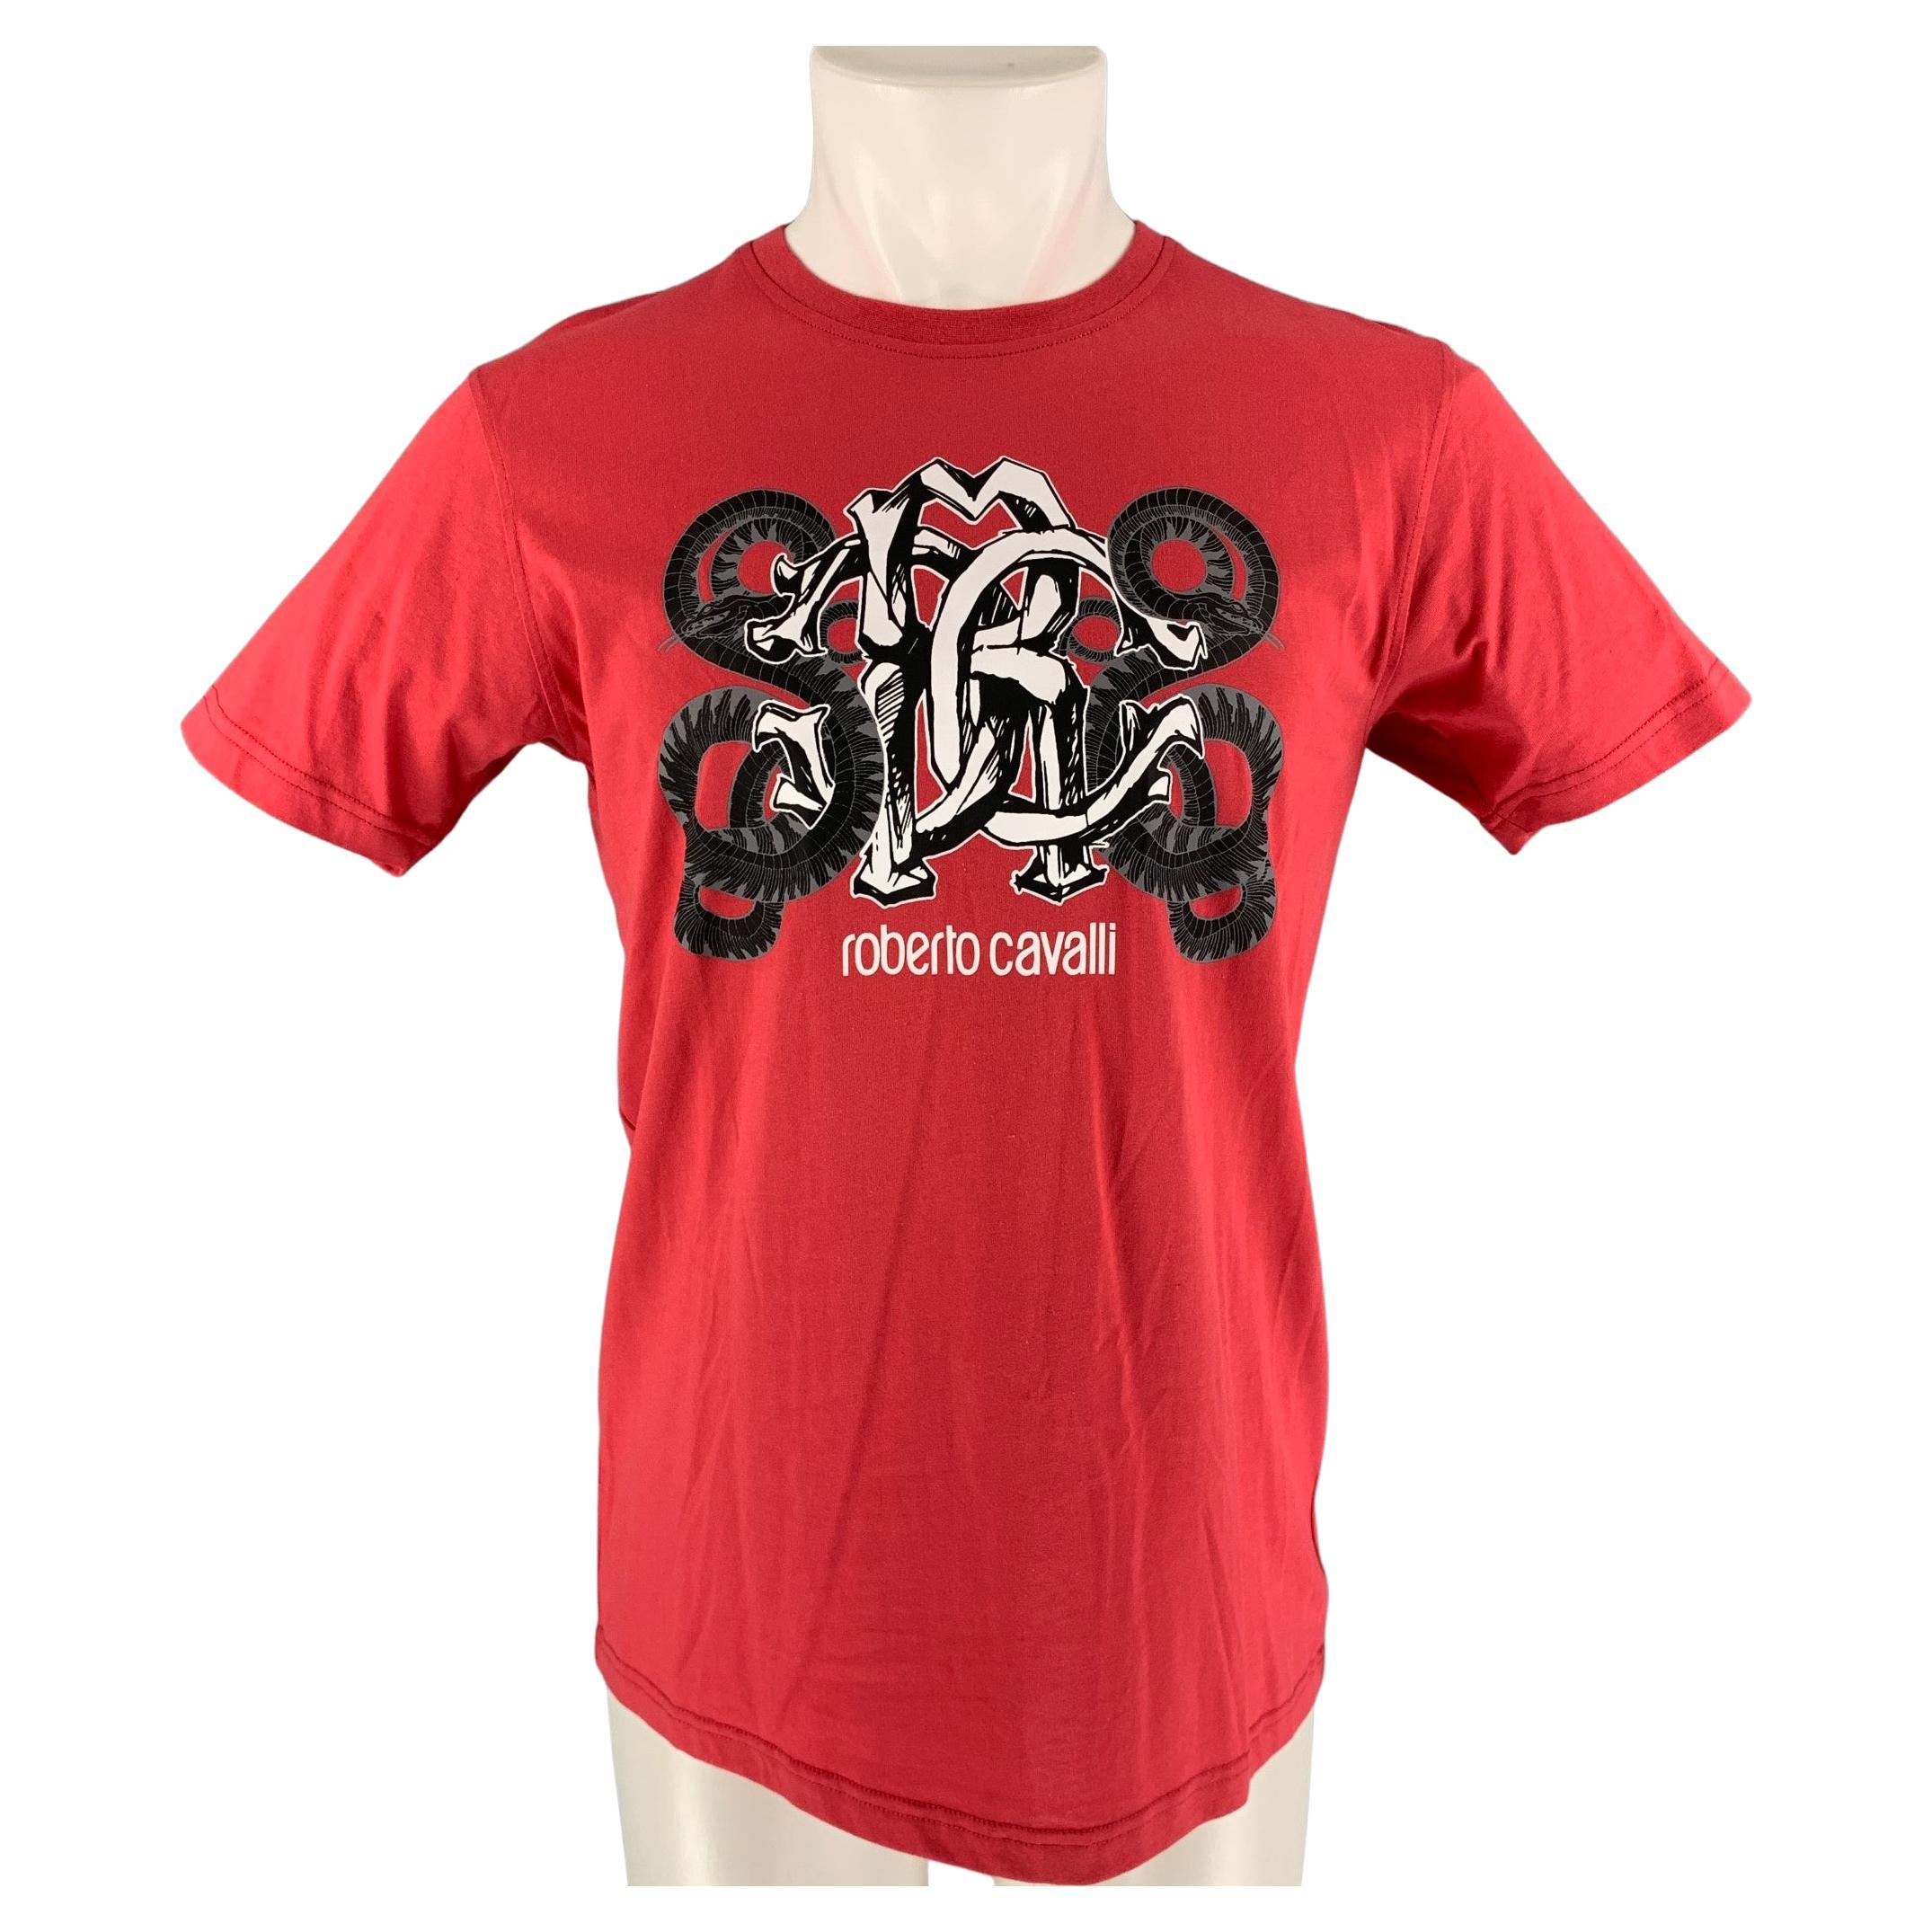 ROBERTO CAVALLI Size M Red, Black & white Graphic Cotton Short Sleeve Shirt